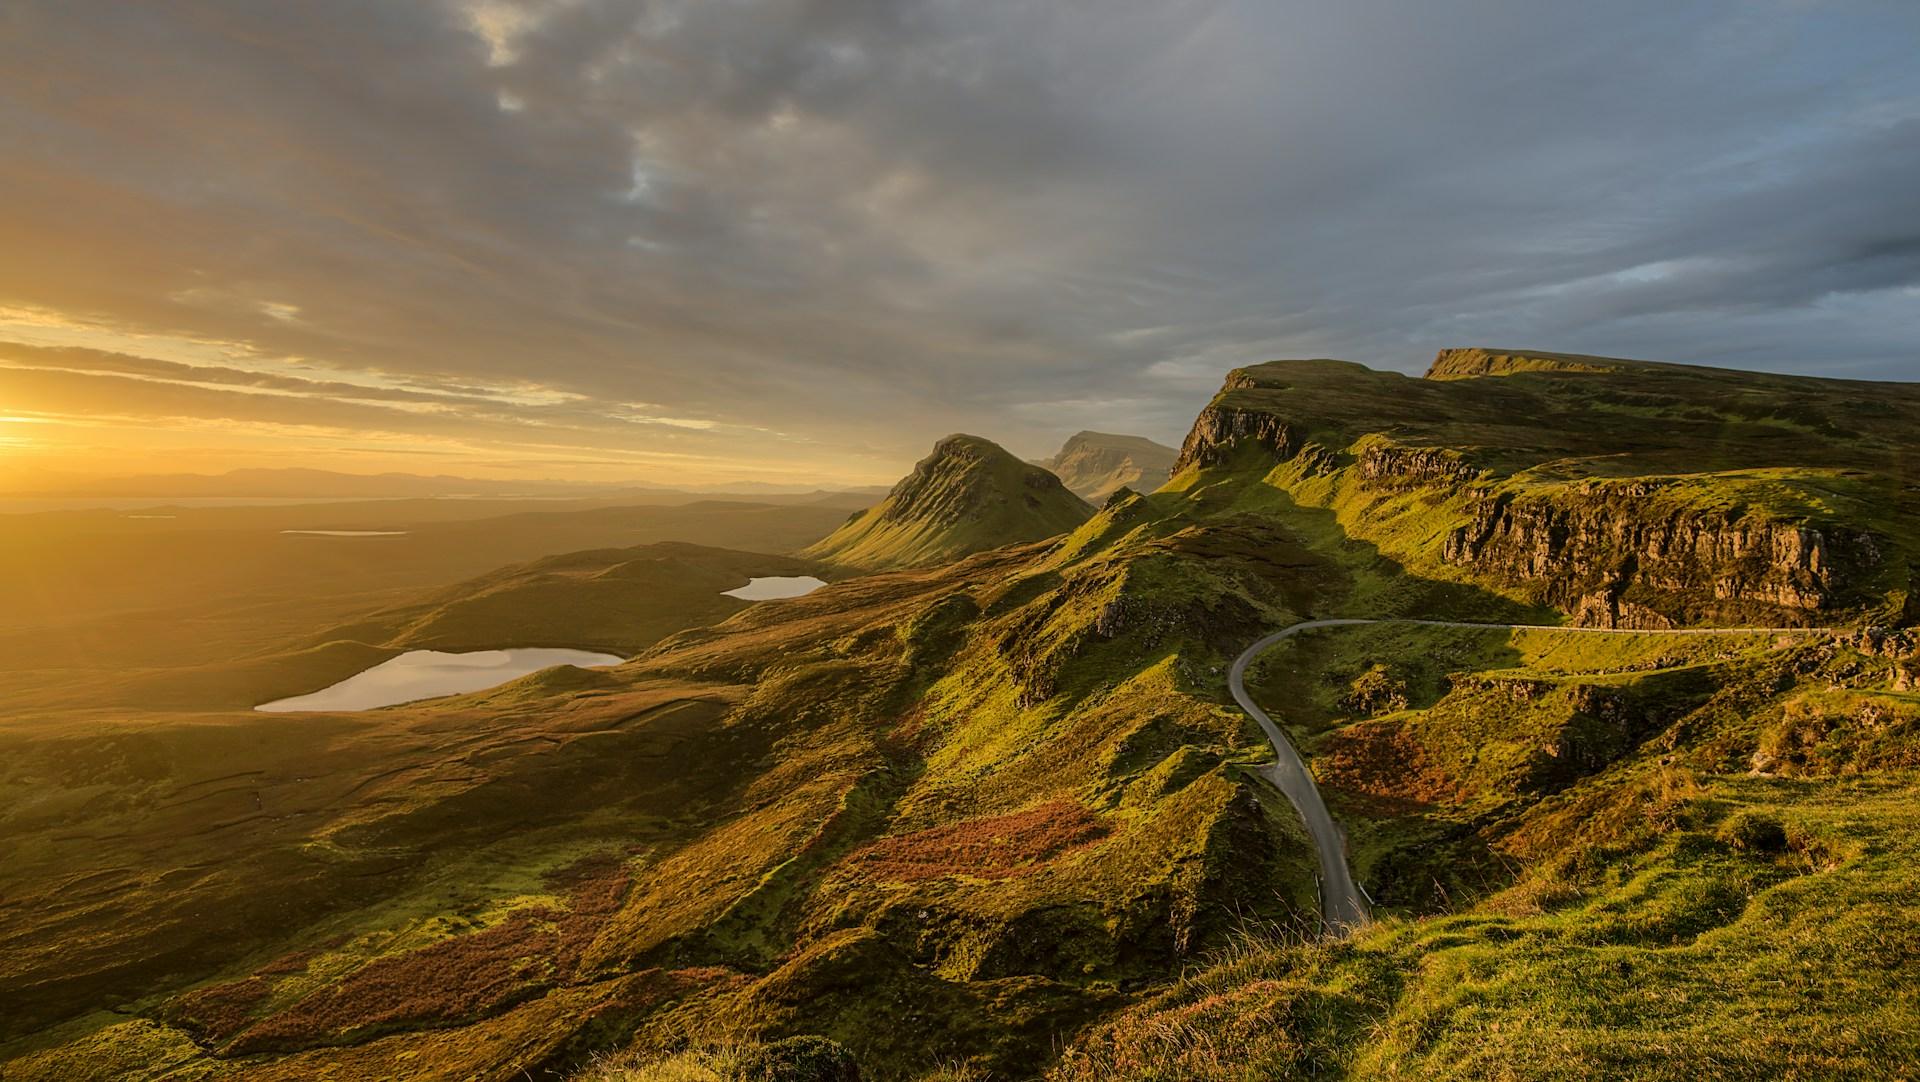 5 of Scotland's Most Inspiring Spots